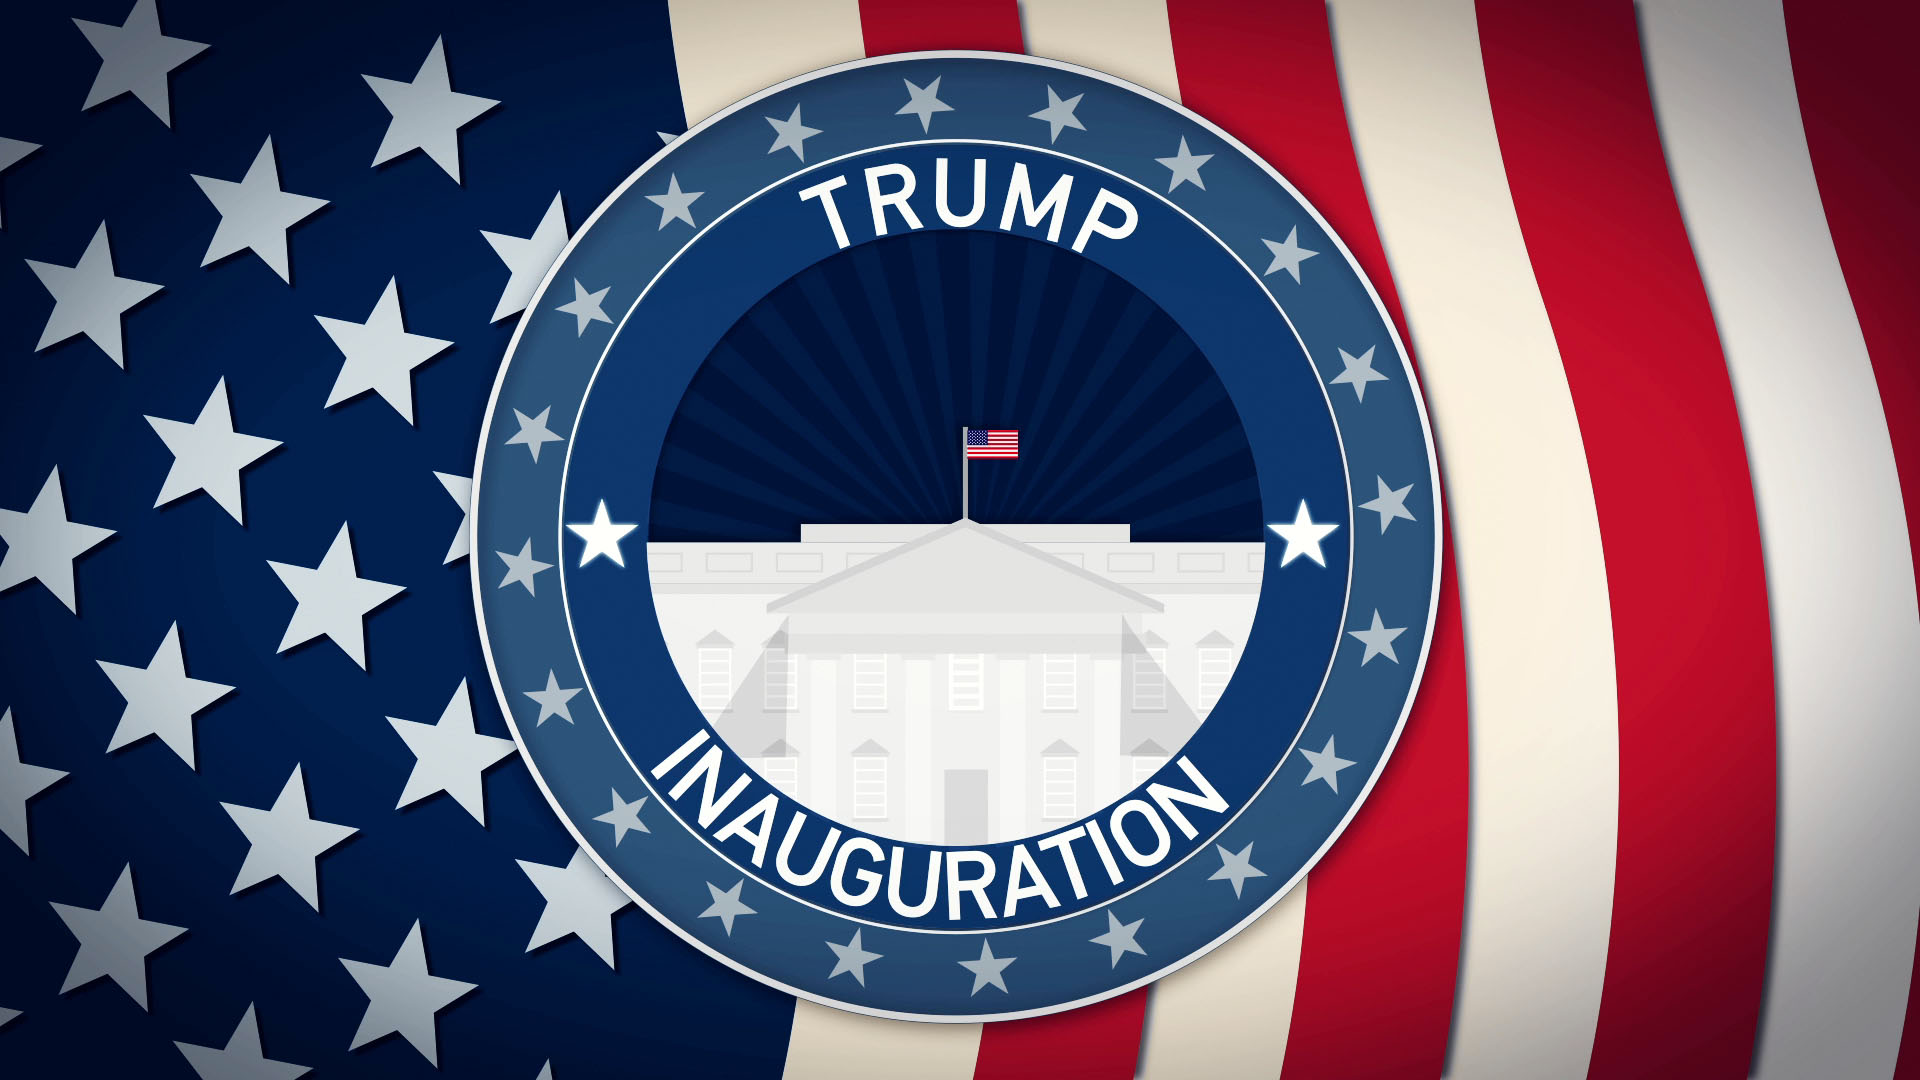 The Inauguration of Donald J. Trump